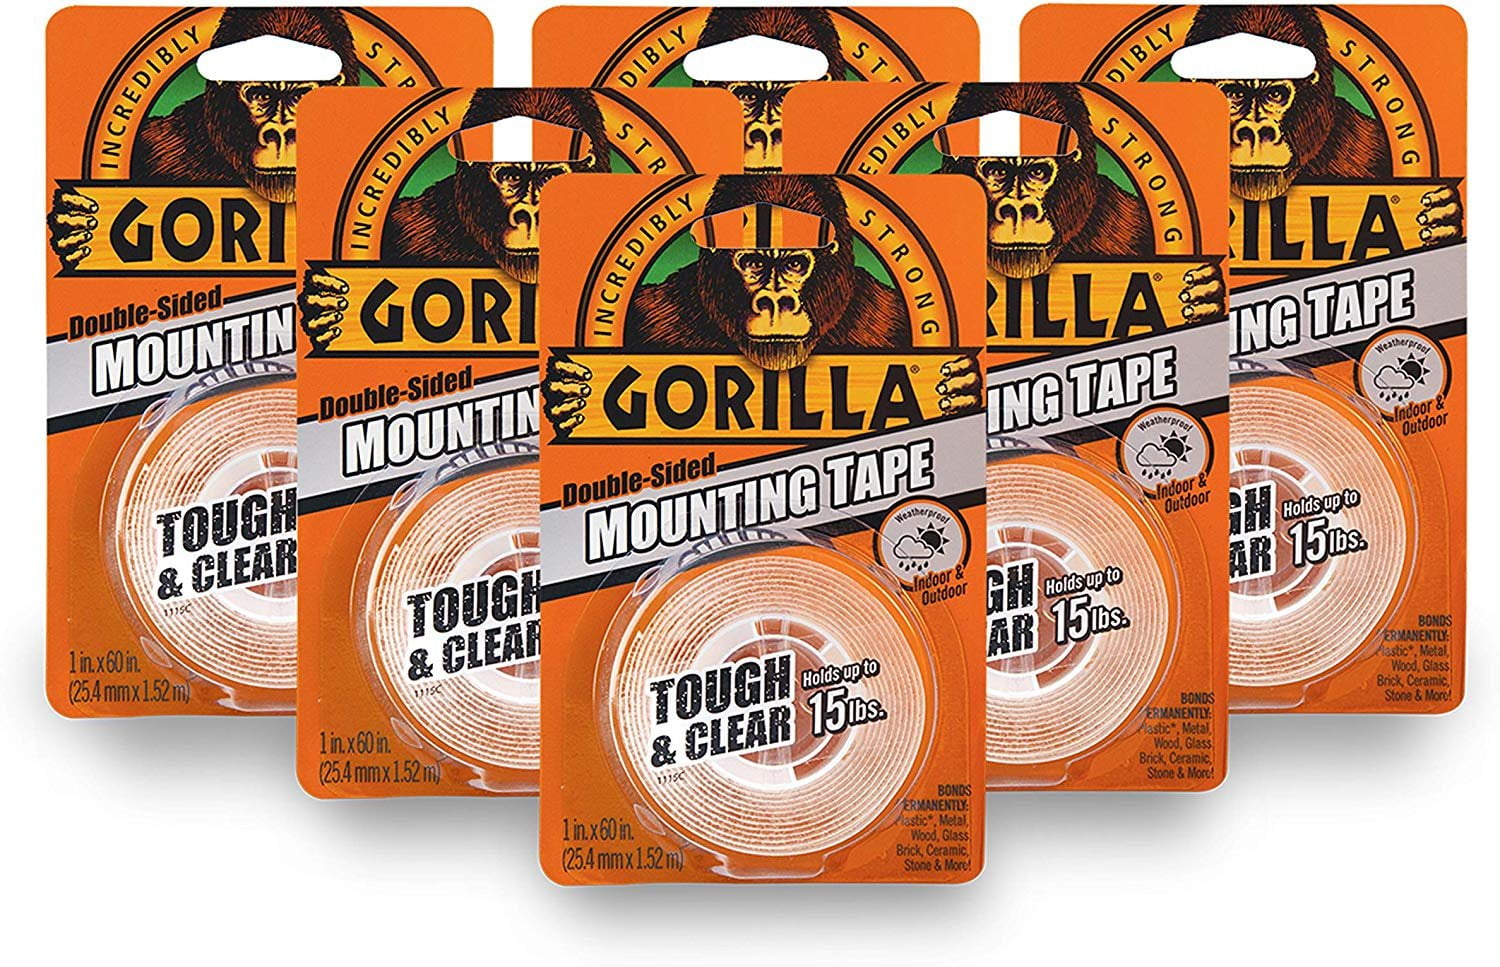 Gorilla - Heavy Duty Double Sided Mounting Tape, Weatherproof, 1 x 60,  Black, (Pack of 2)